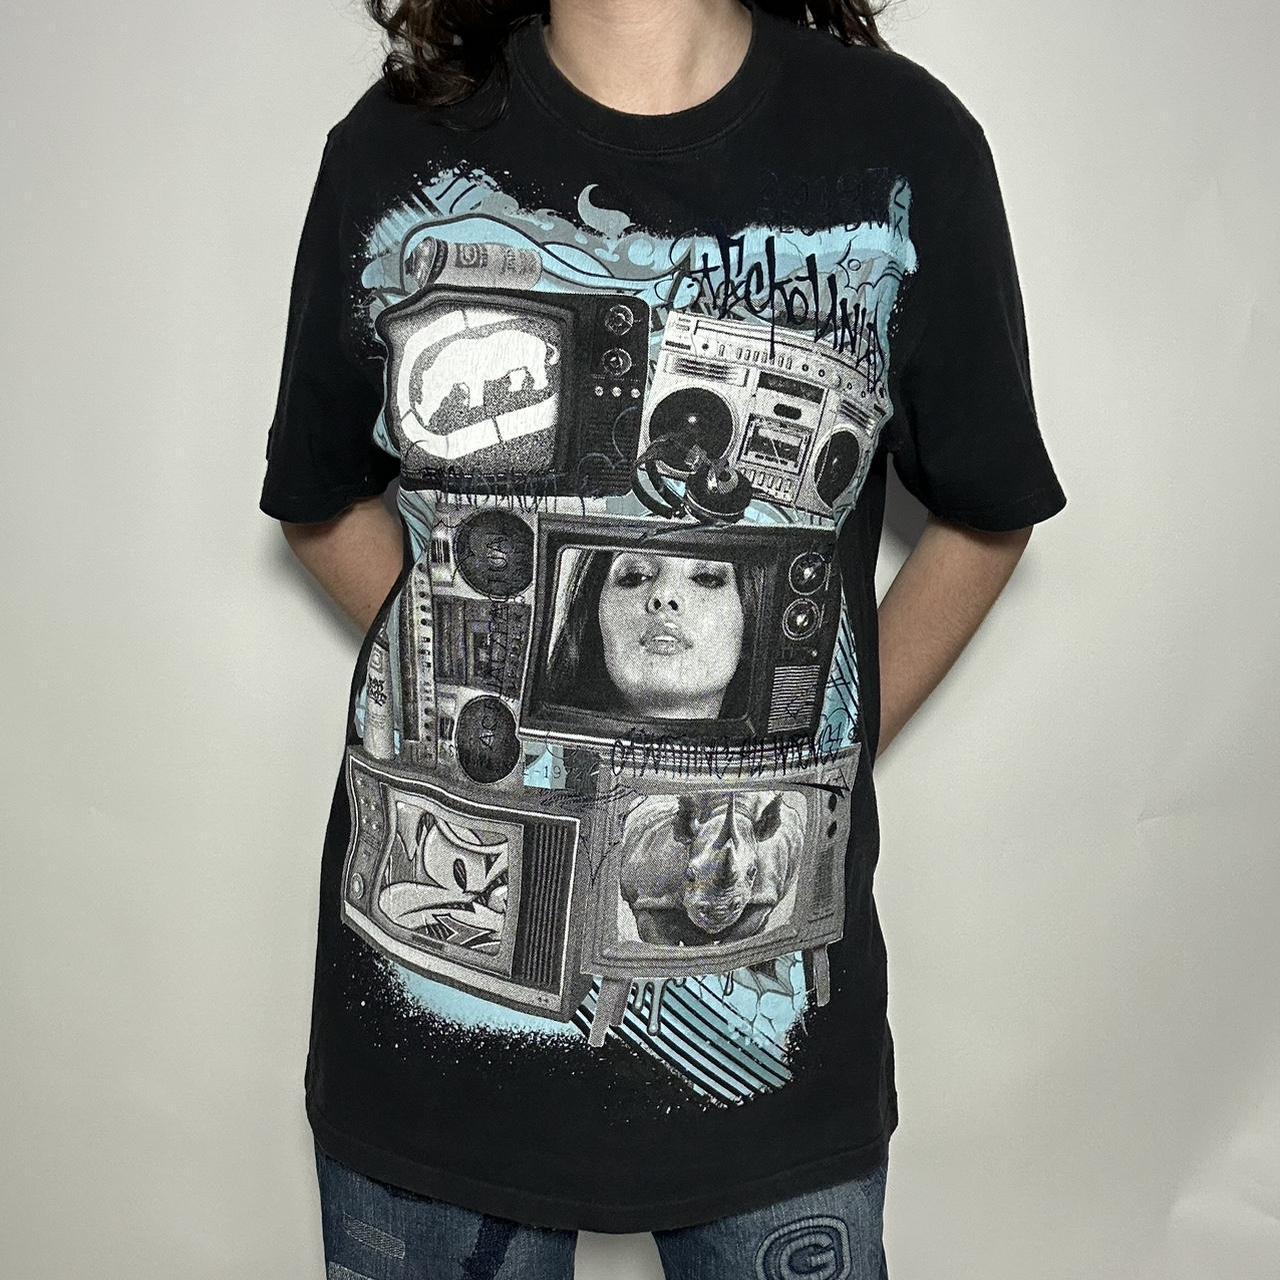 Vintage Ecko UnIimited 90s graffiti graphic oversized t-shirt